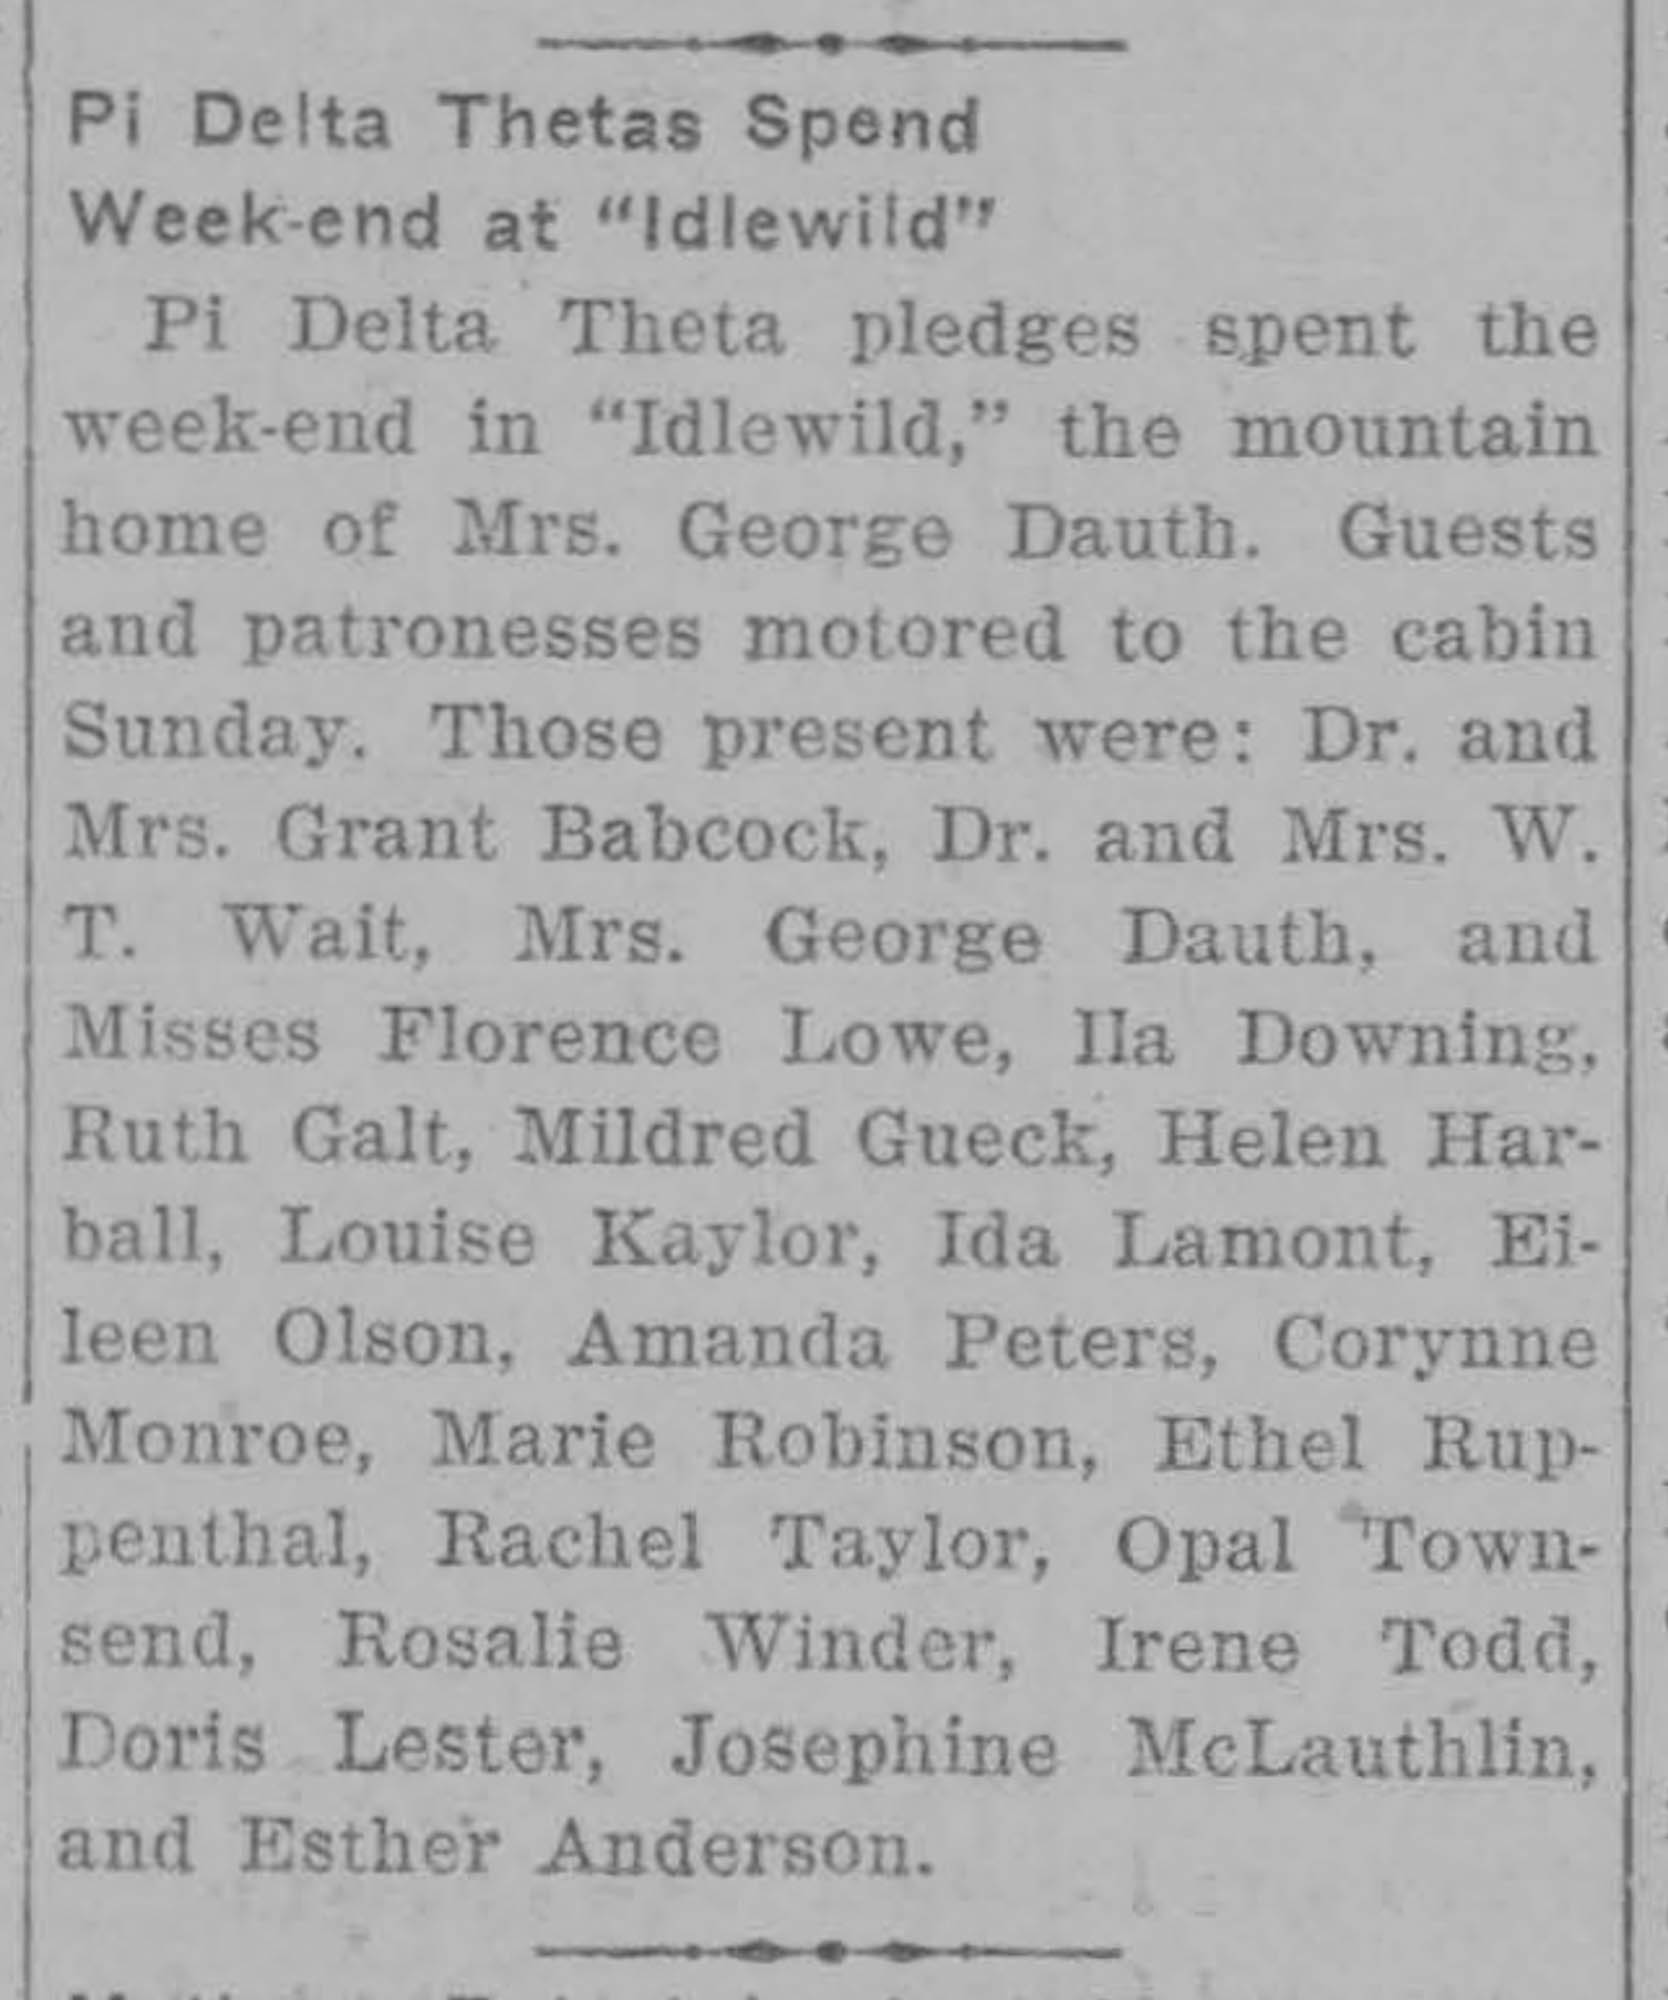 Idlewild Lodge - idlewildlodge.github.io - 1929-05-16 - The Mirror - Florence Dauth and Pi Delta Theta at Idlewild Lodge